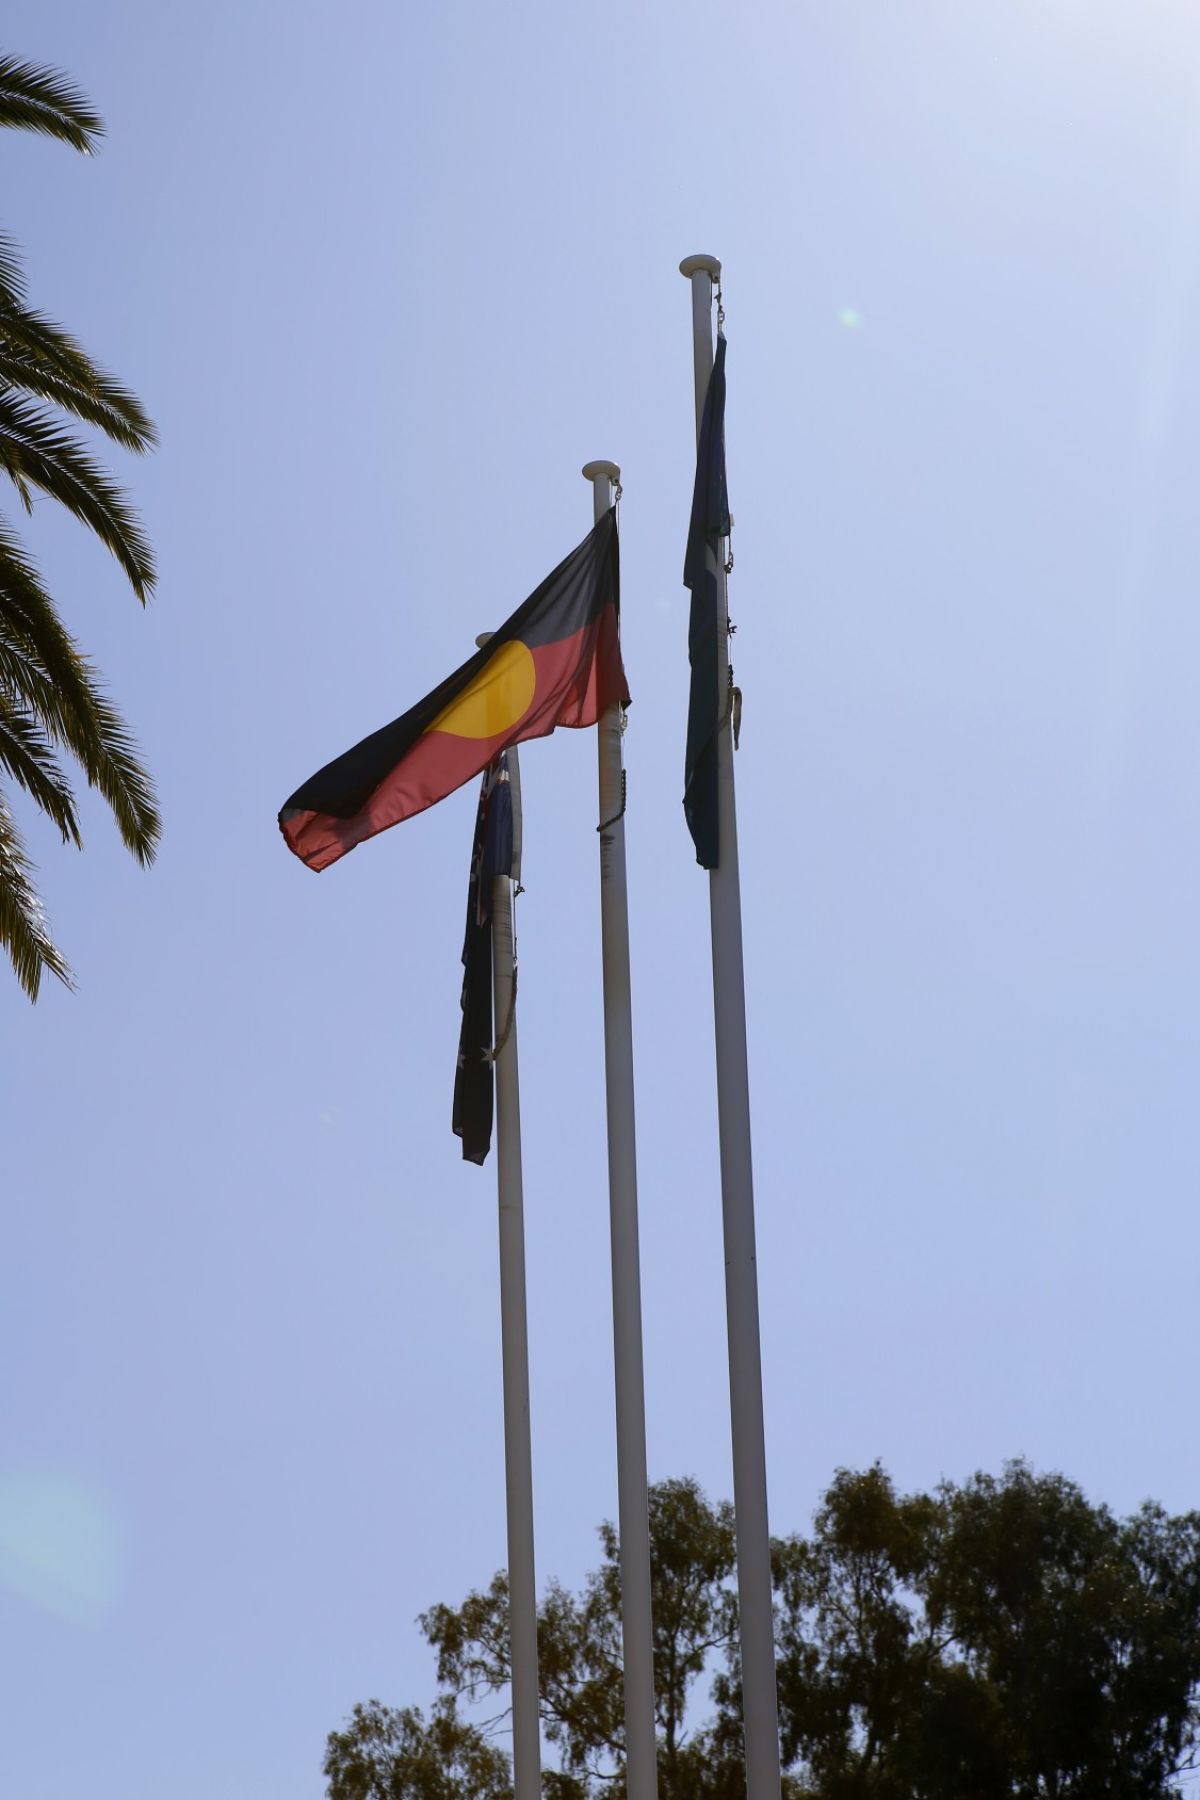 Australian, Aboriginal and Torres Strait Islander flags raised, against blue sky